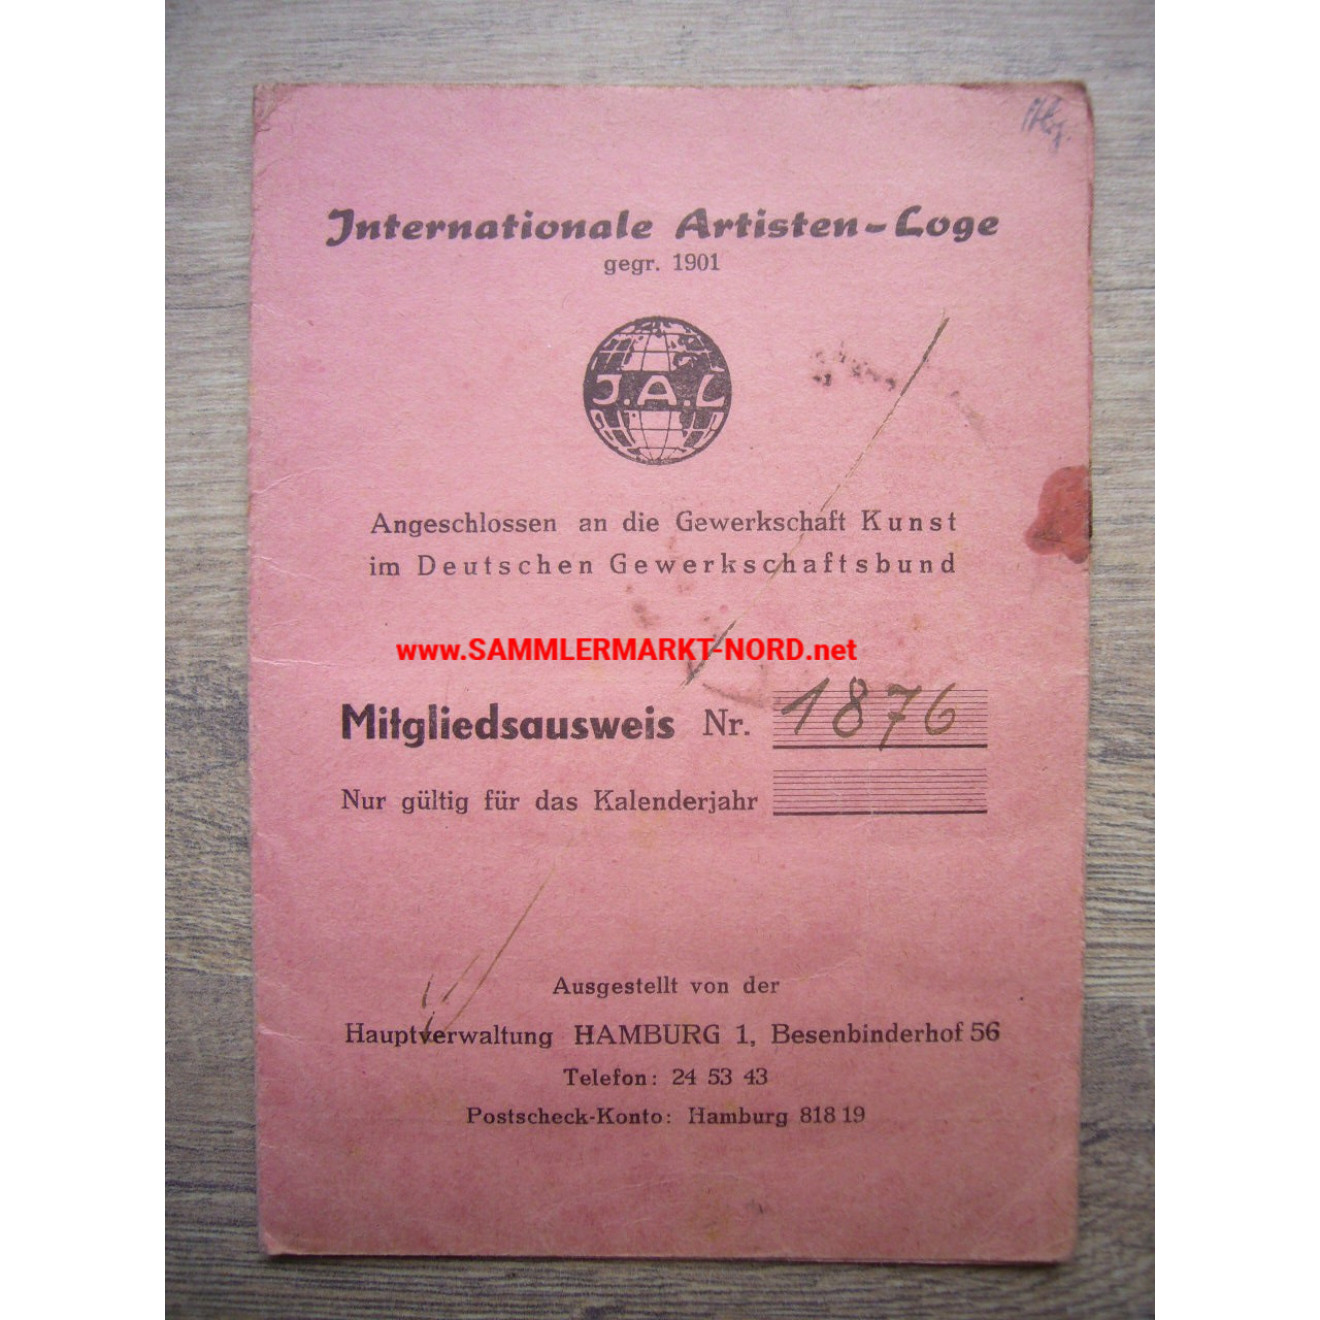 International Artists' Lodge - Membership Card